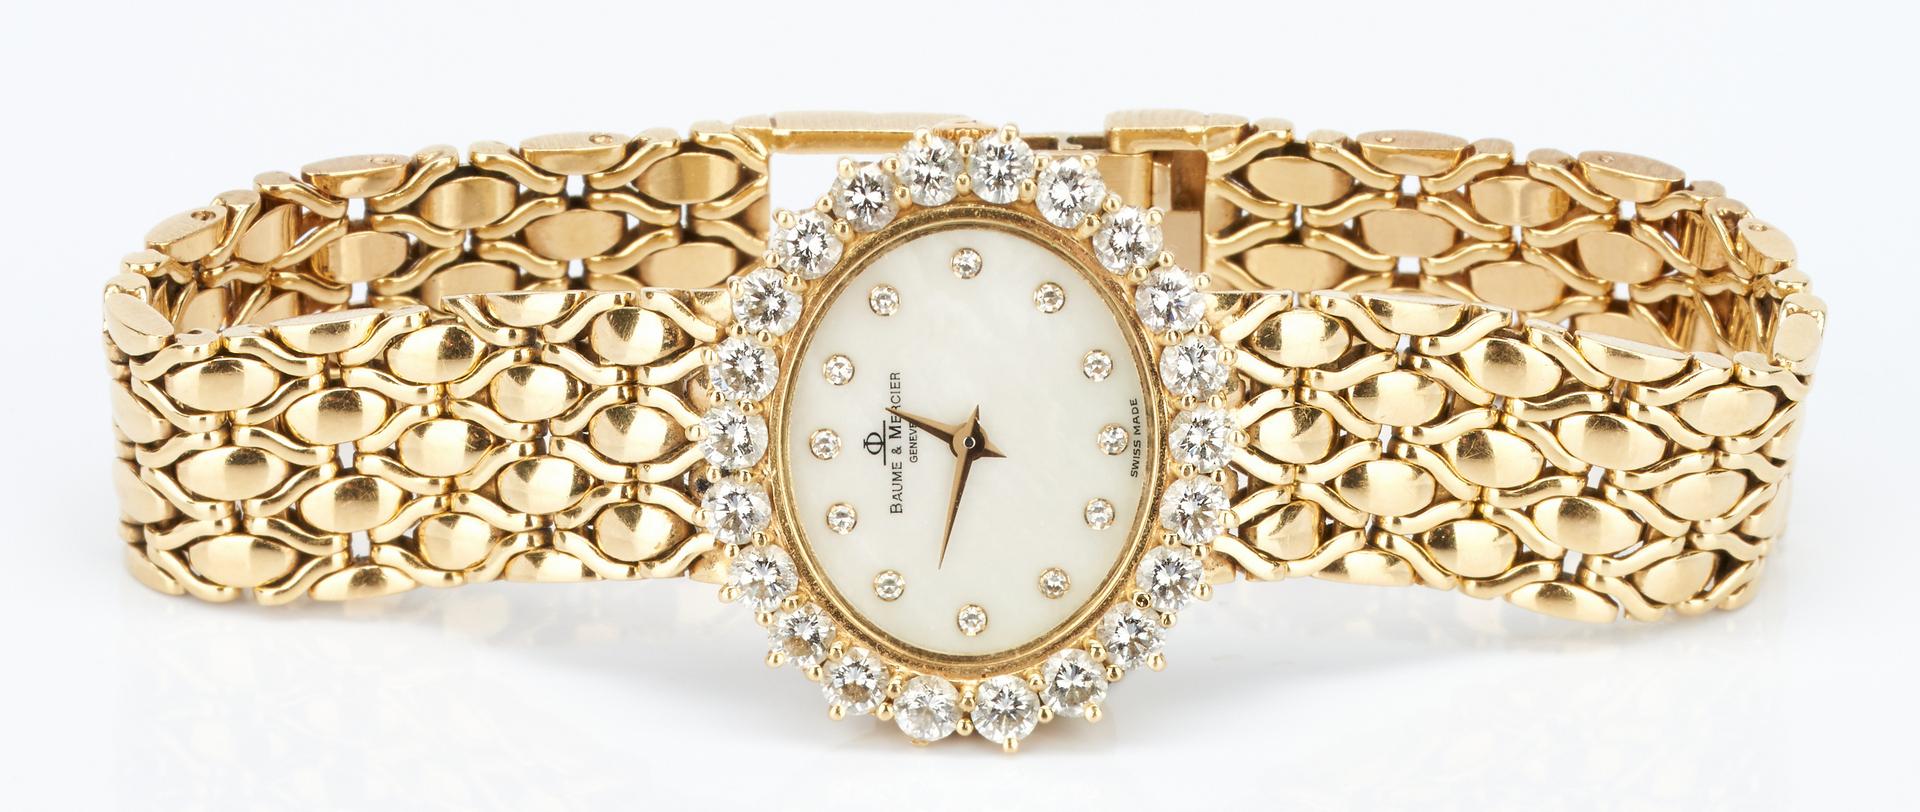 18K Baume & Mercier watch with Diamond Surround - Image 3 of 13